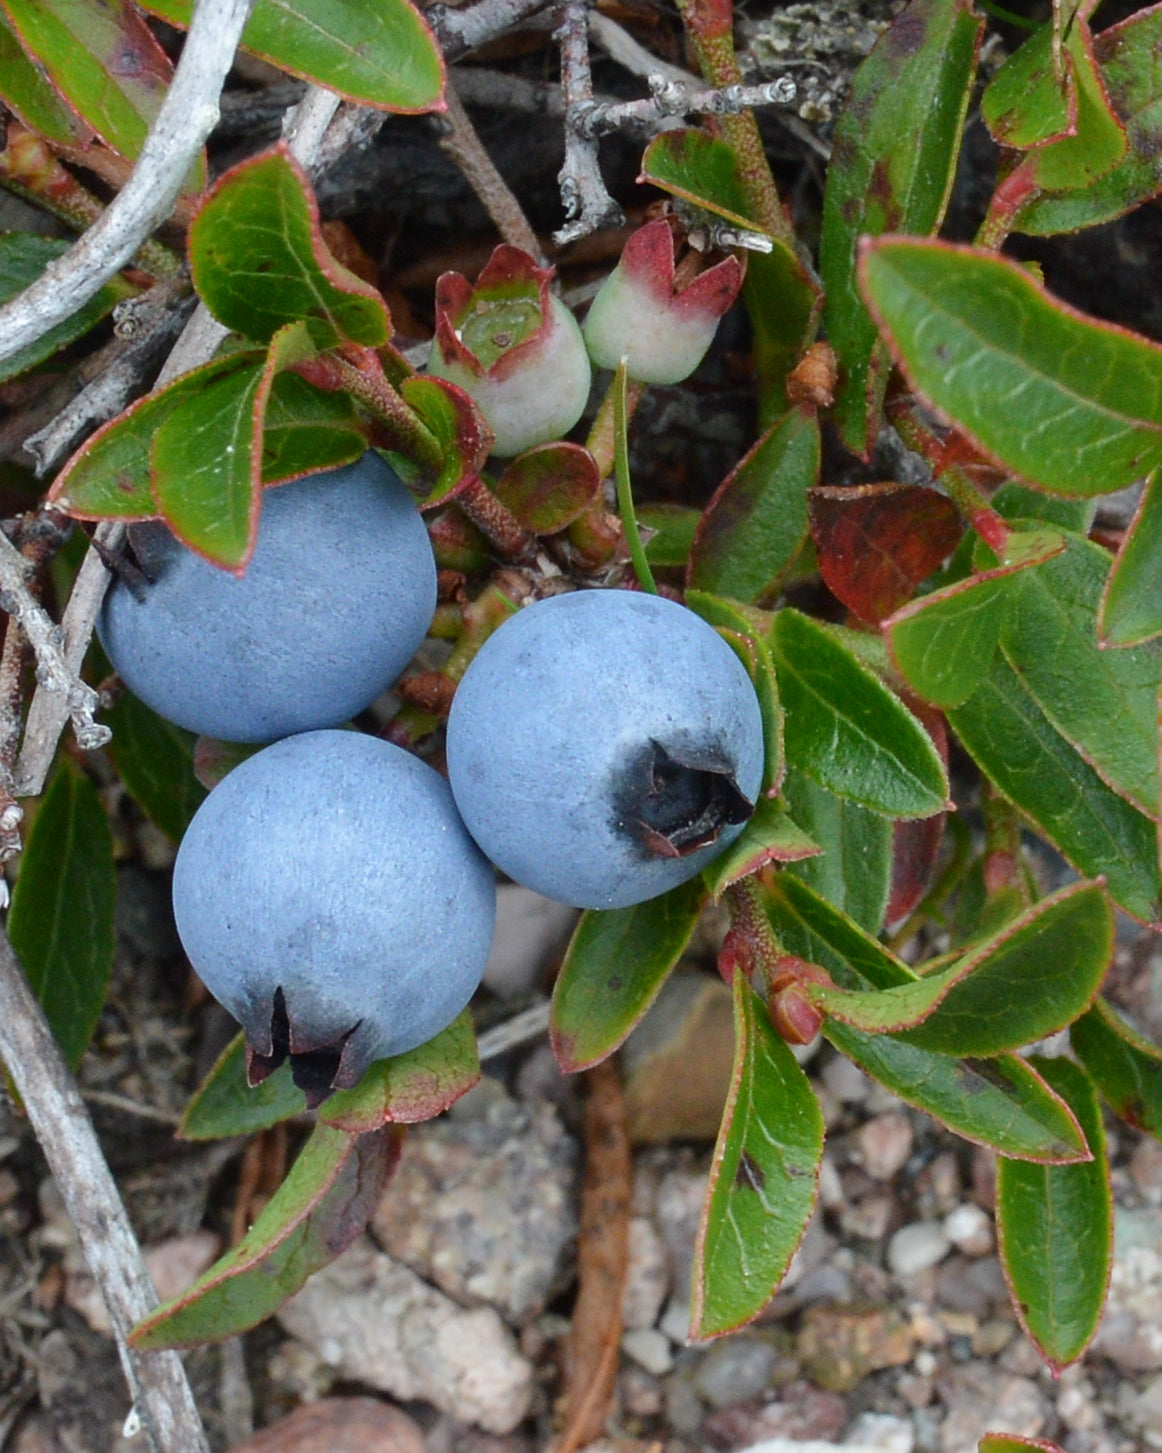 Vaccinium angustifolium Lowbush Blueberry Image Credit: Ryan Hodnett, CC BY-SA 4.0 <https://creativecommons.org/licenses/by-sa/4.0>, via Wikimedia Commons